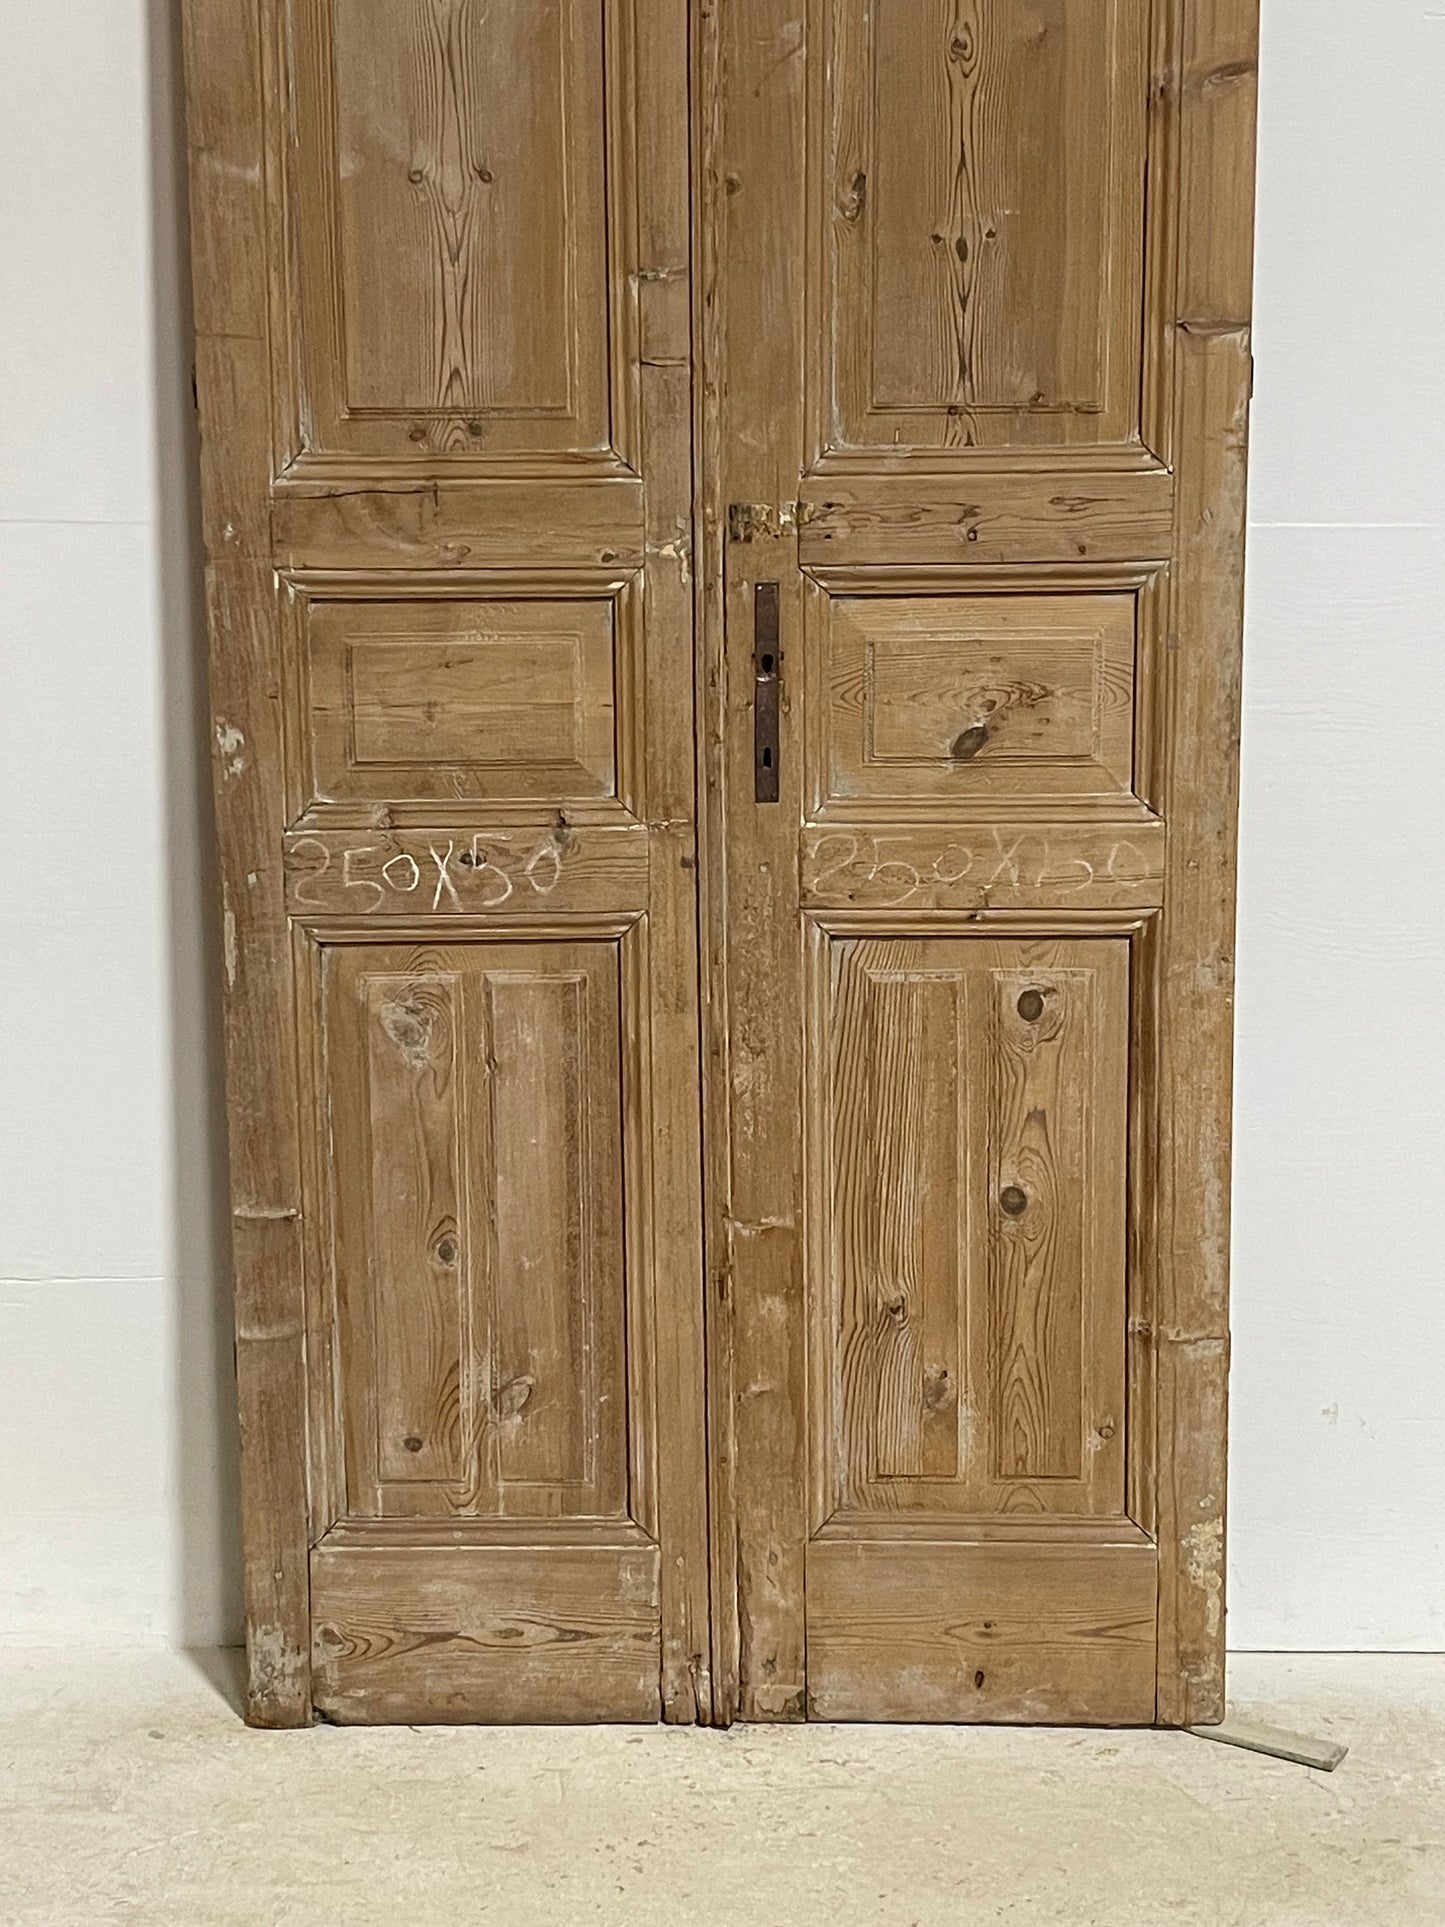 Antique French panel doors (98x39.75) G0185s